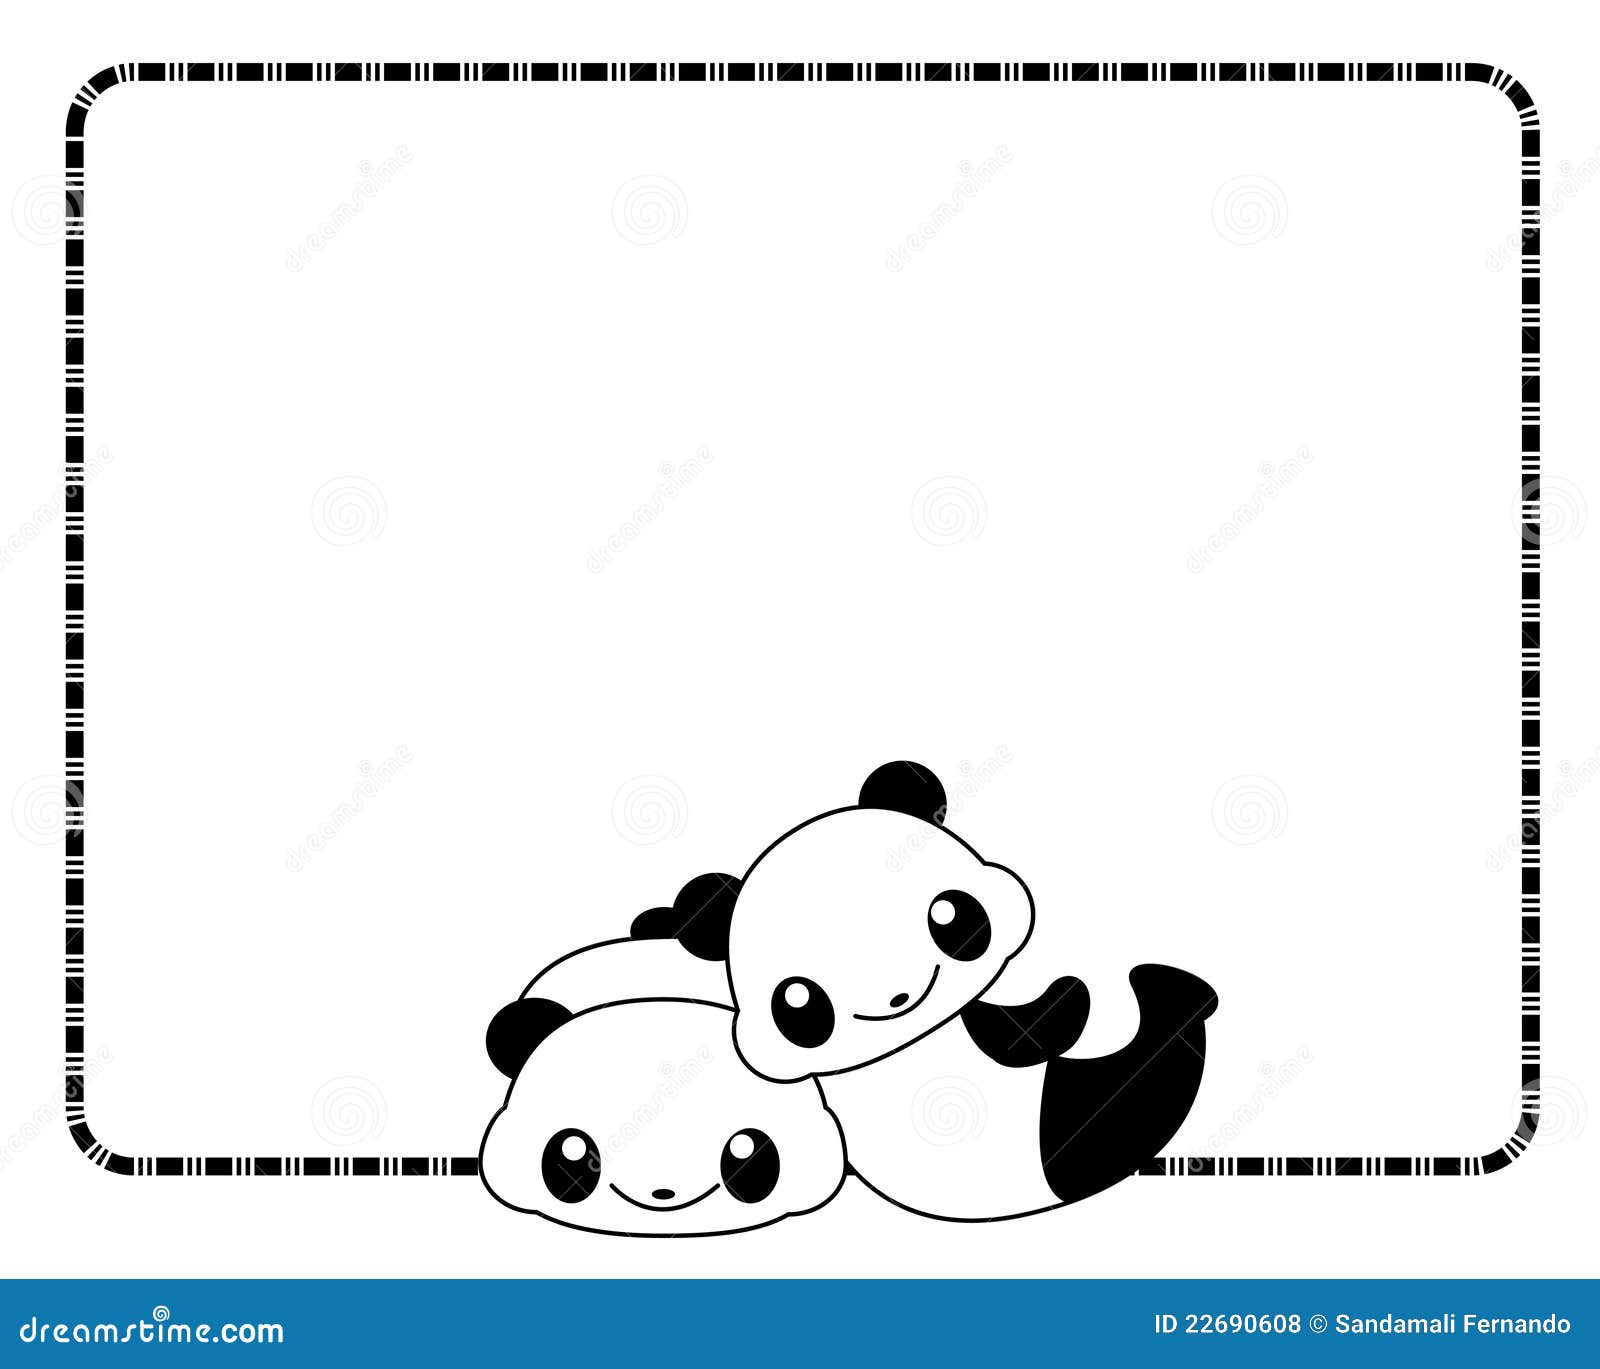 clipart panda borders - photo #3